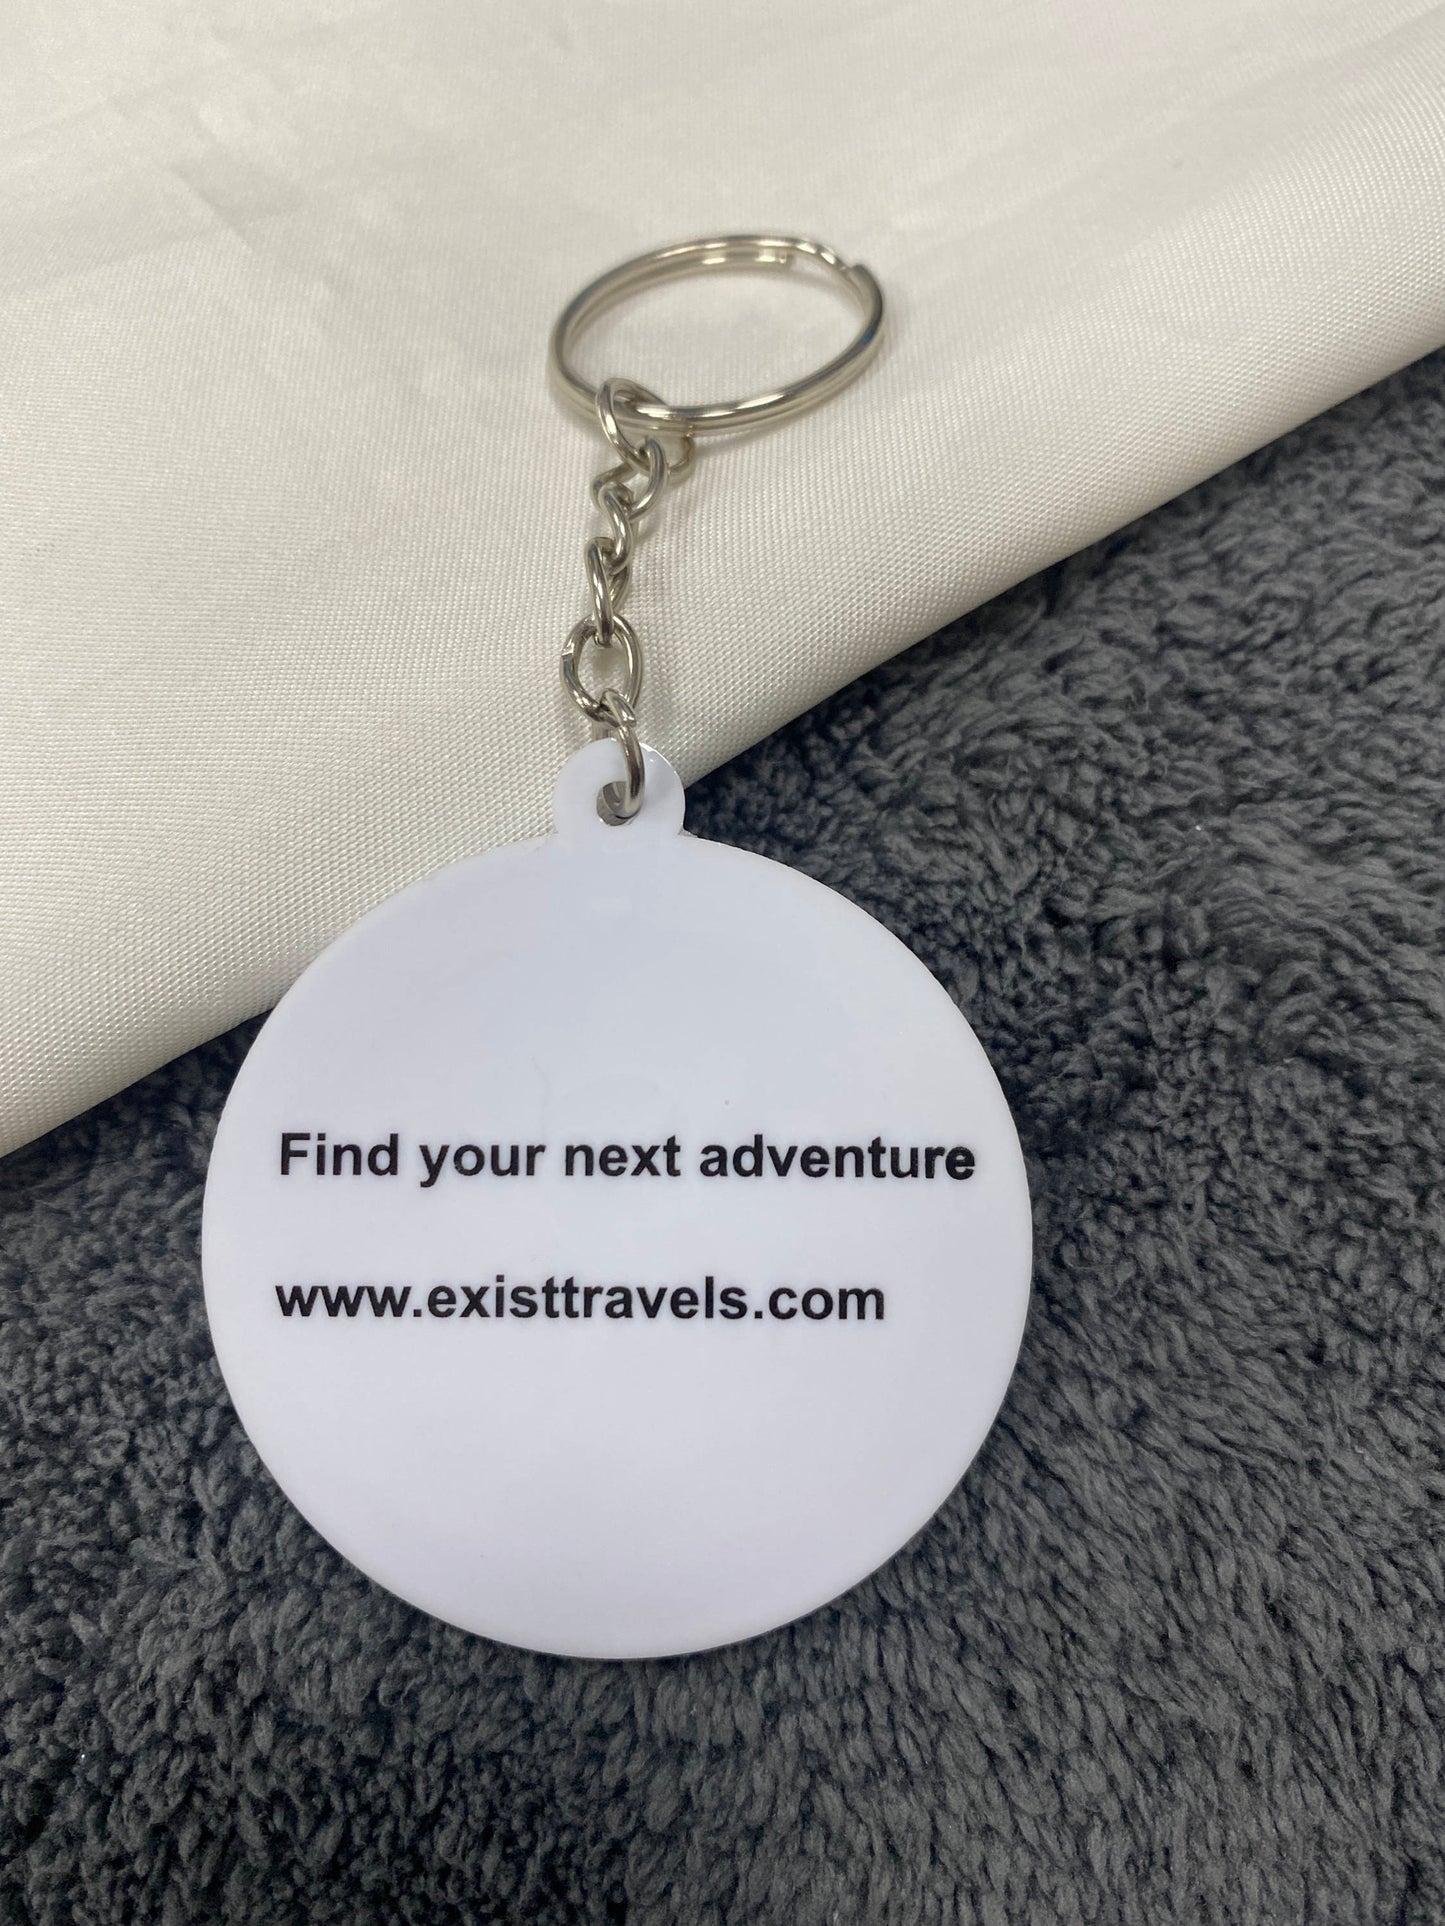 Exist Travels Key Chain